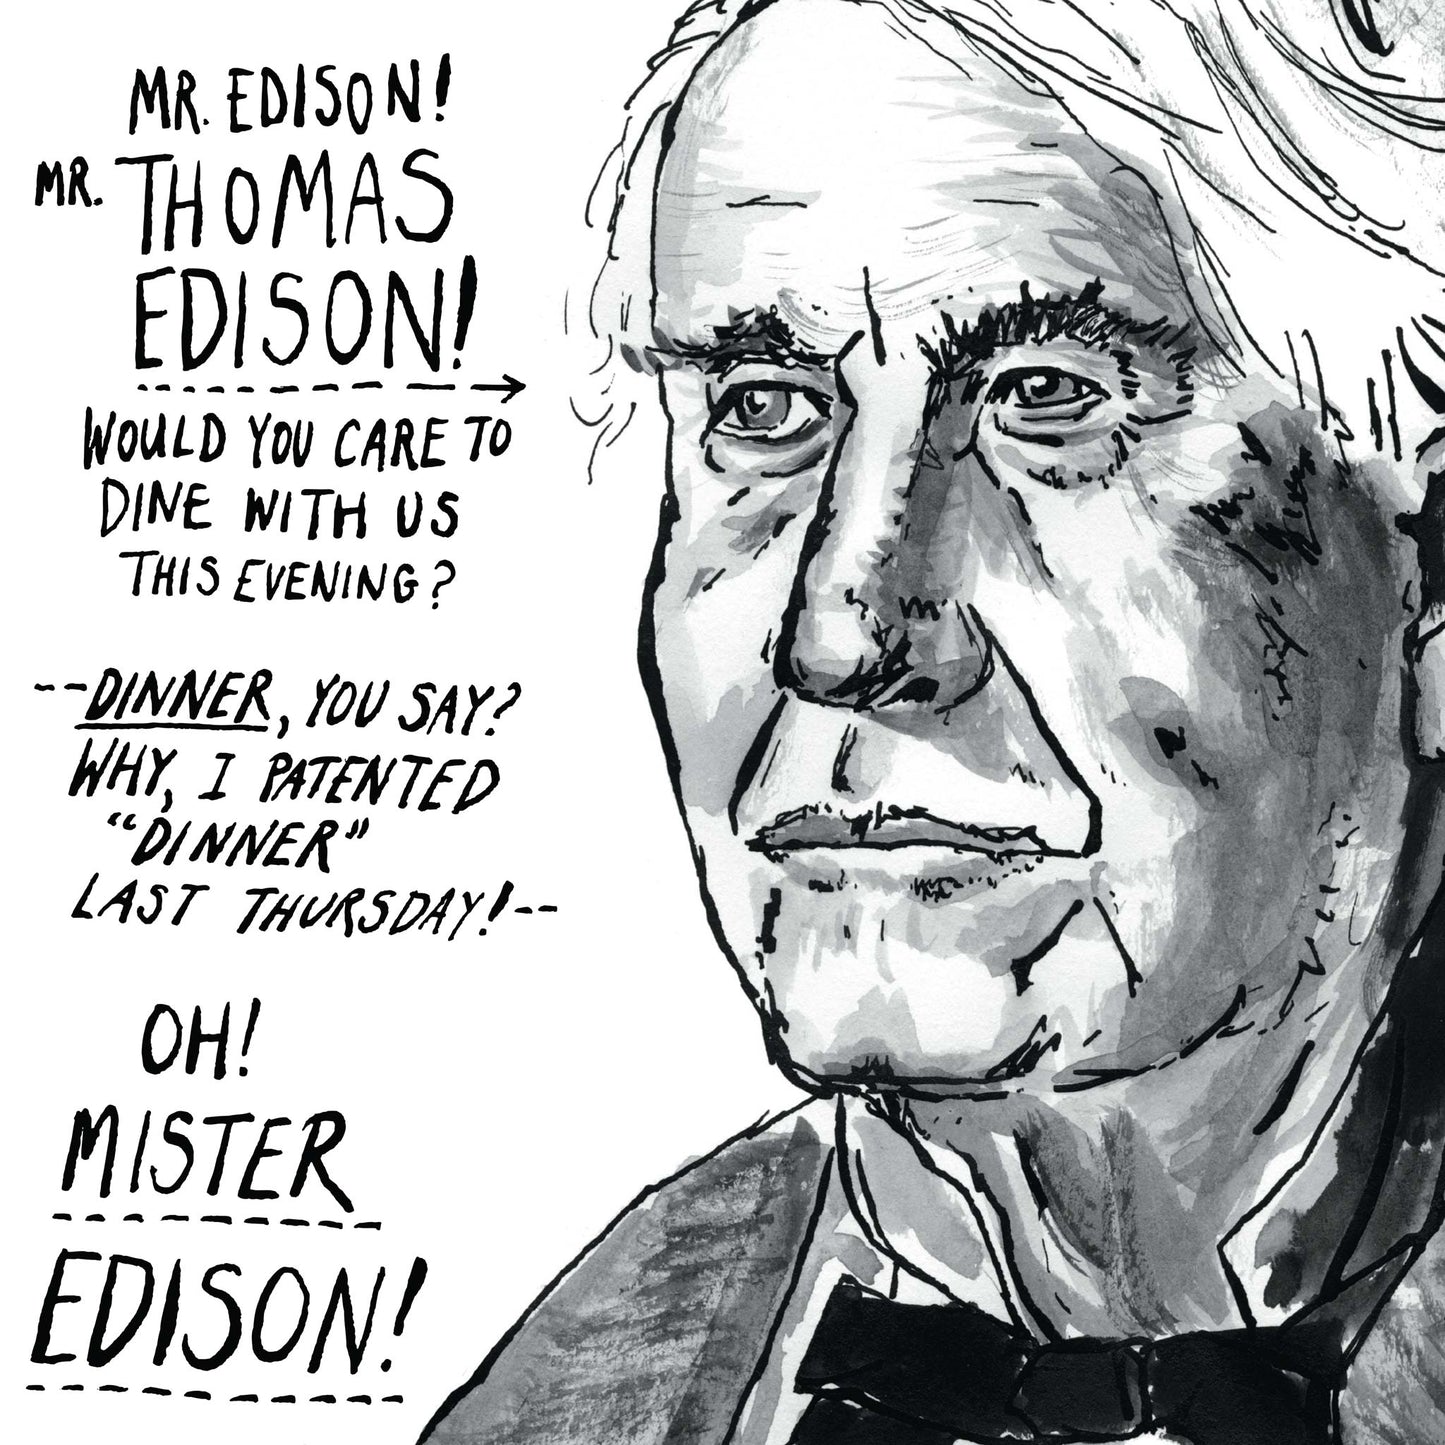 Thomas Edison Portrait Poster Print